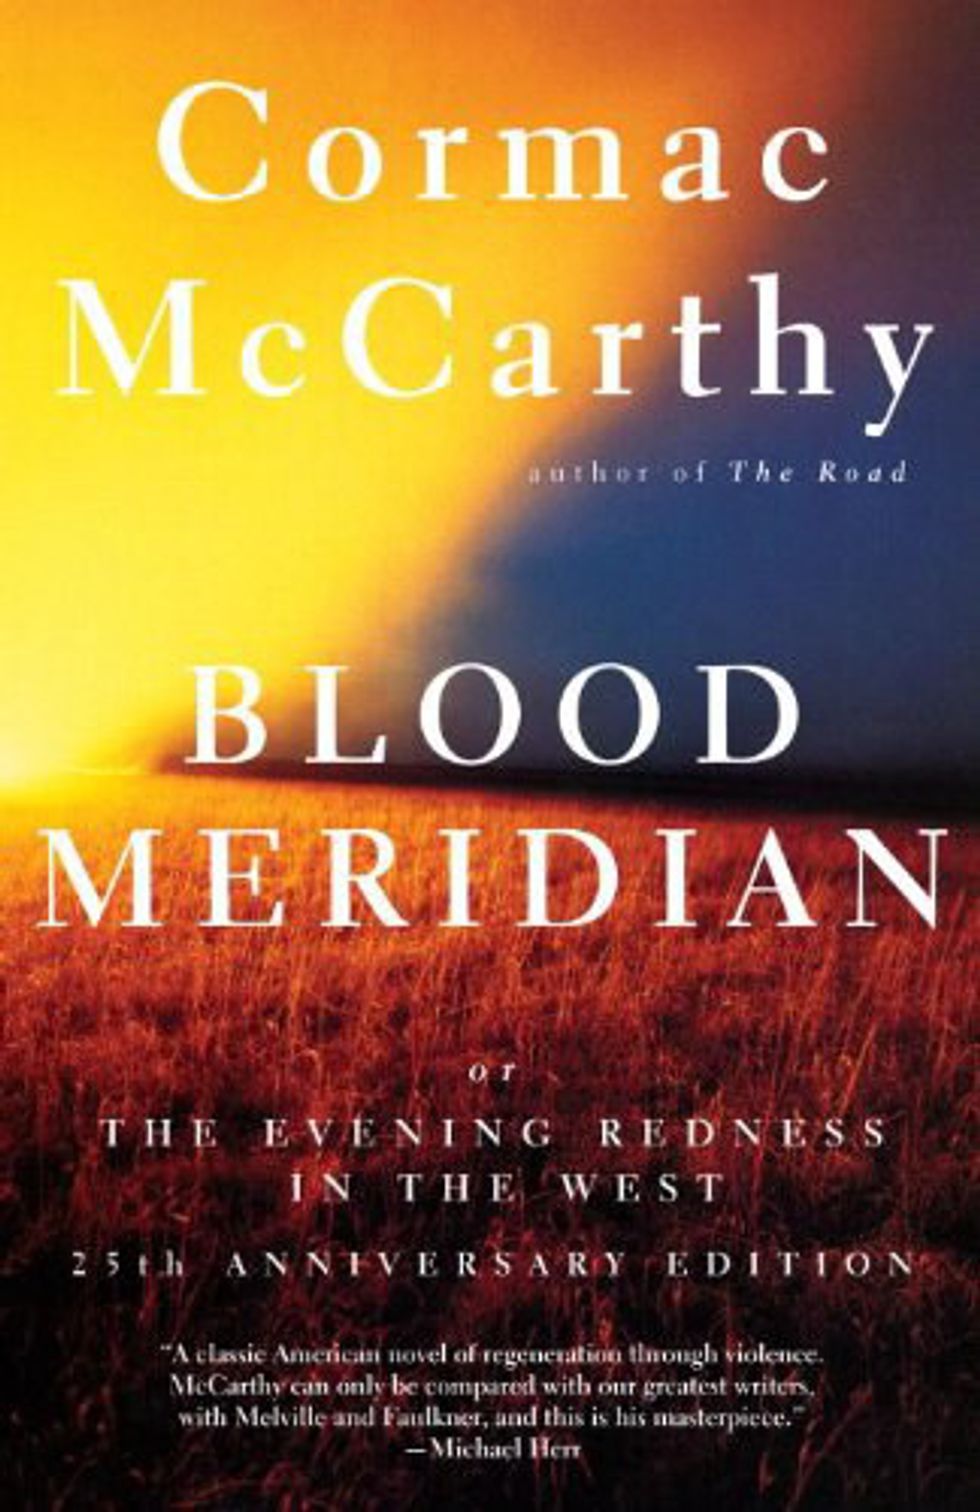 Top 5 Cormac McCarthy Novels